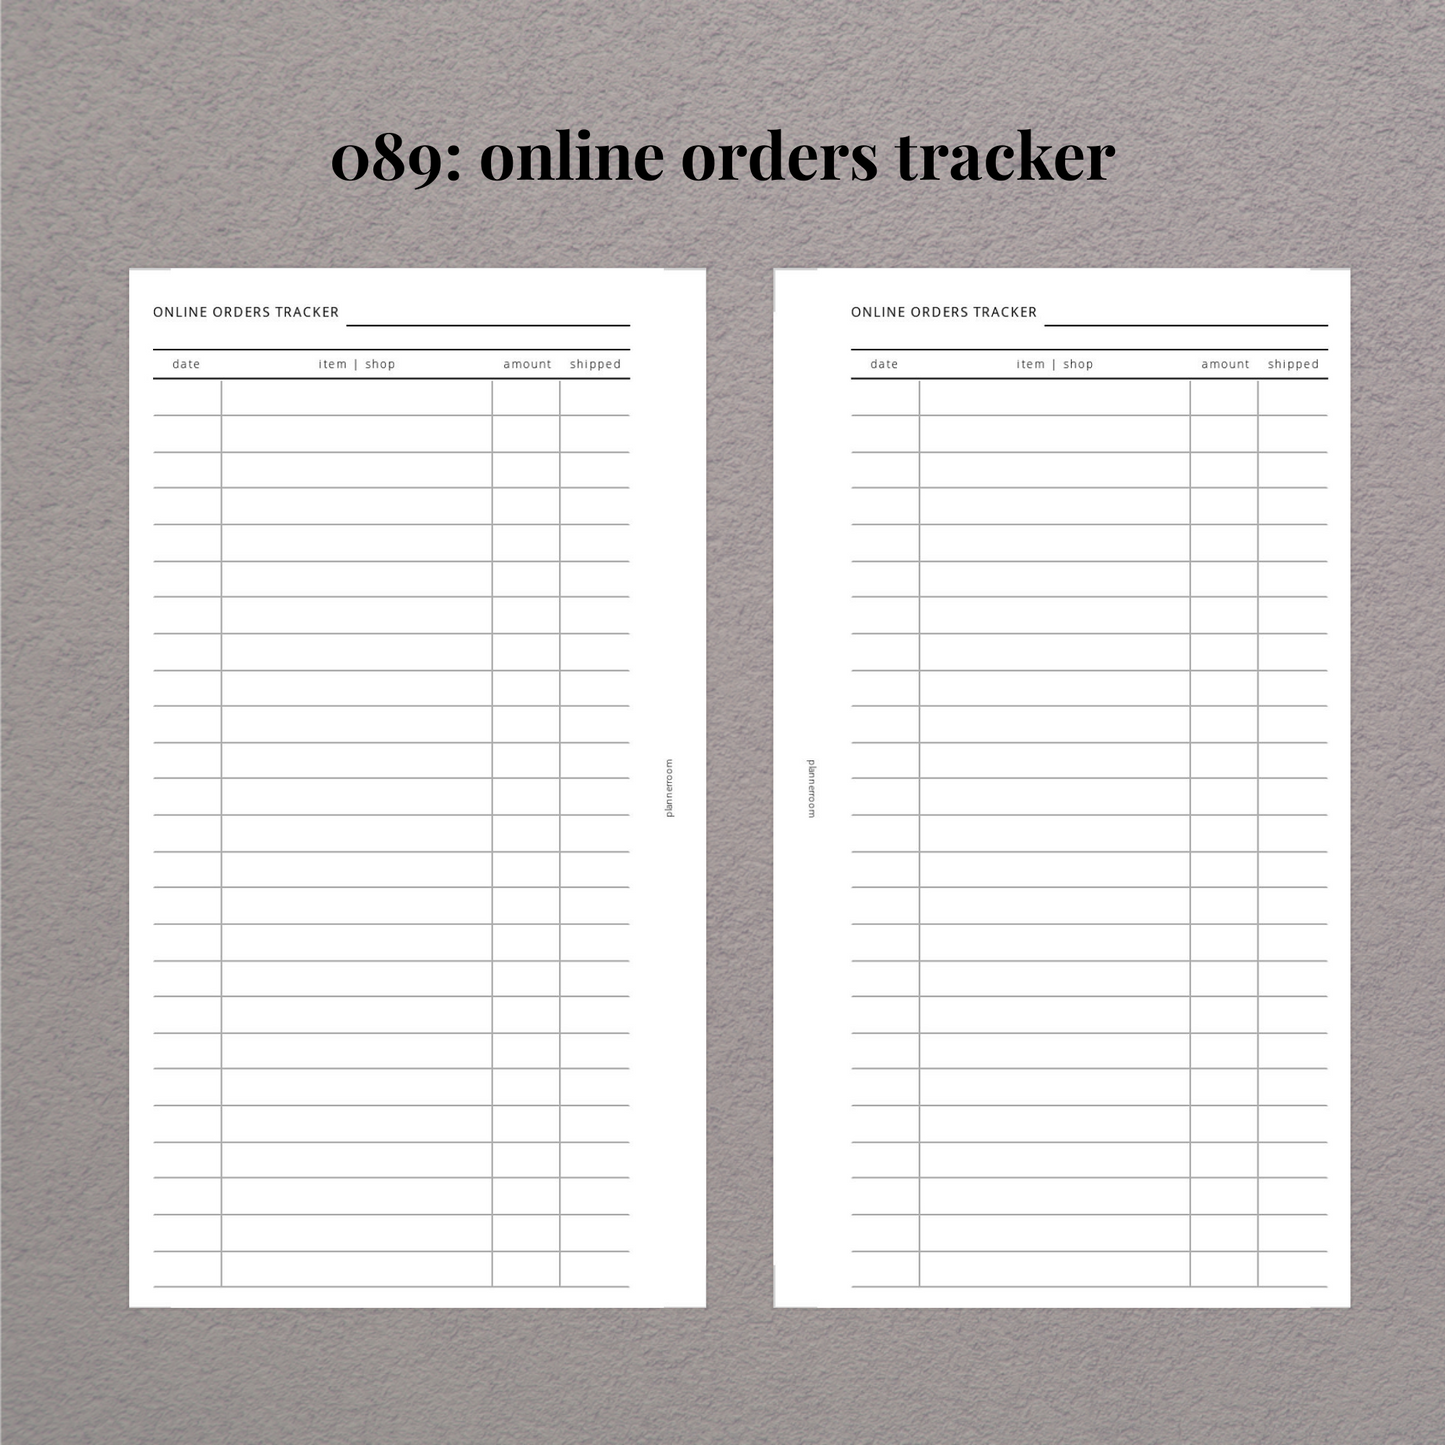 Online orders tracker | Printable inserts | 089